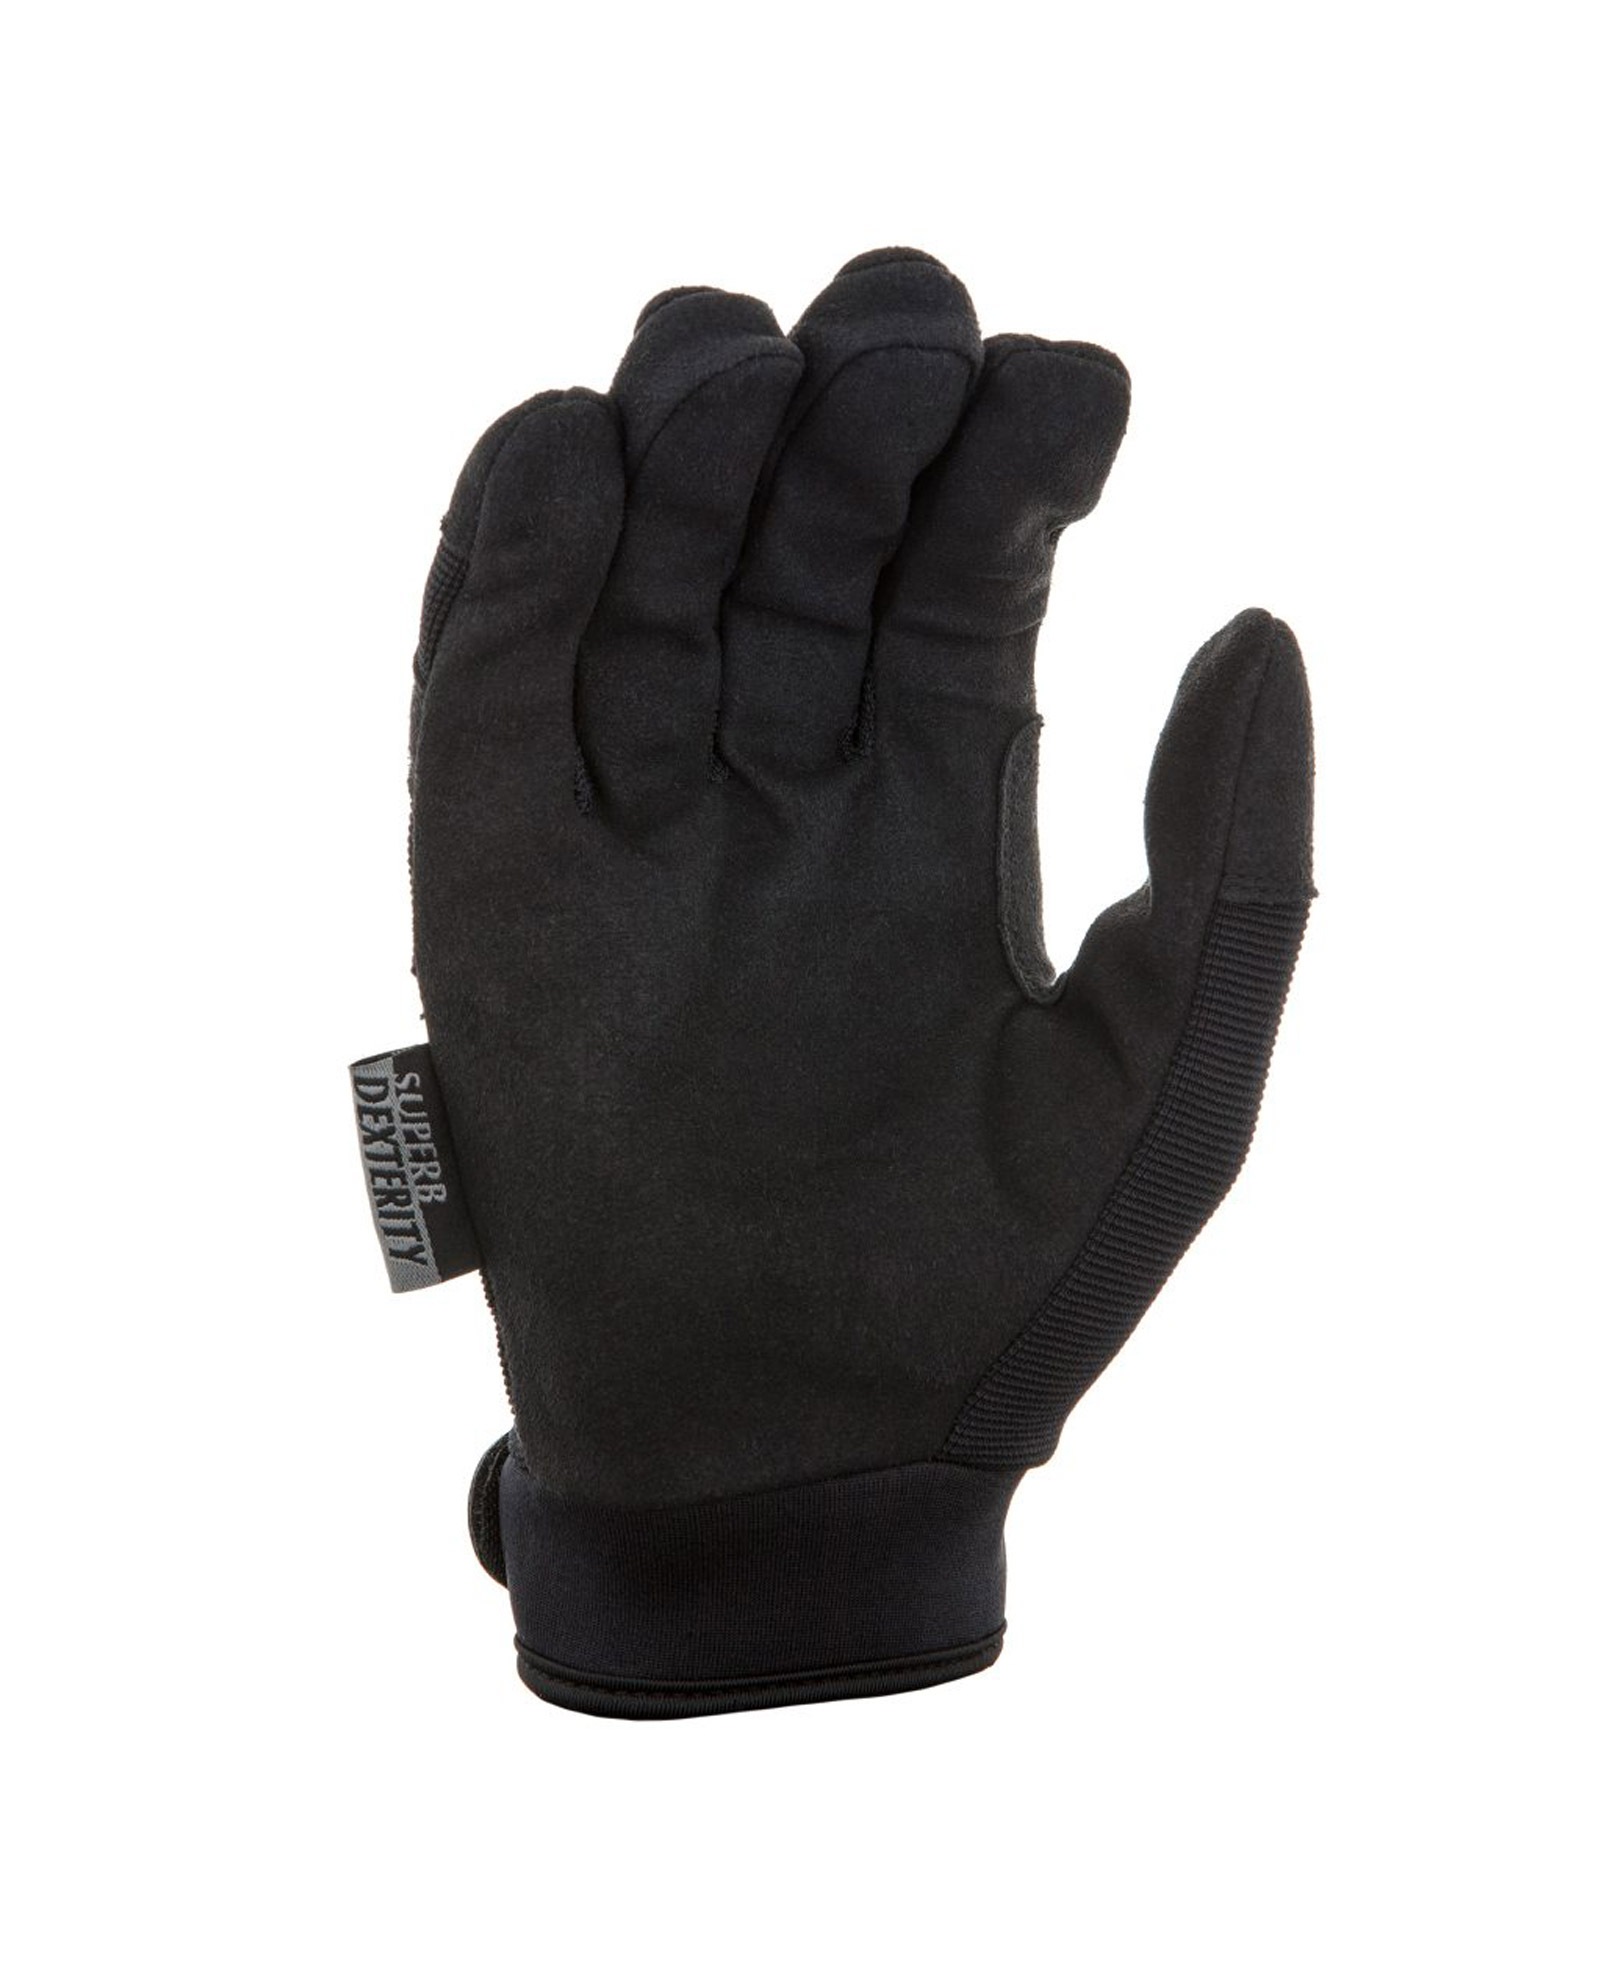 Dirty Rigger Glove Dty Comf0.5 Comfort Fit 0.5 High Dexterity Glove 1